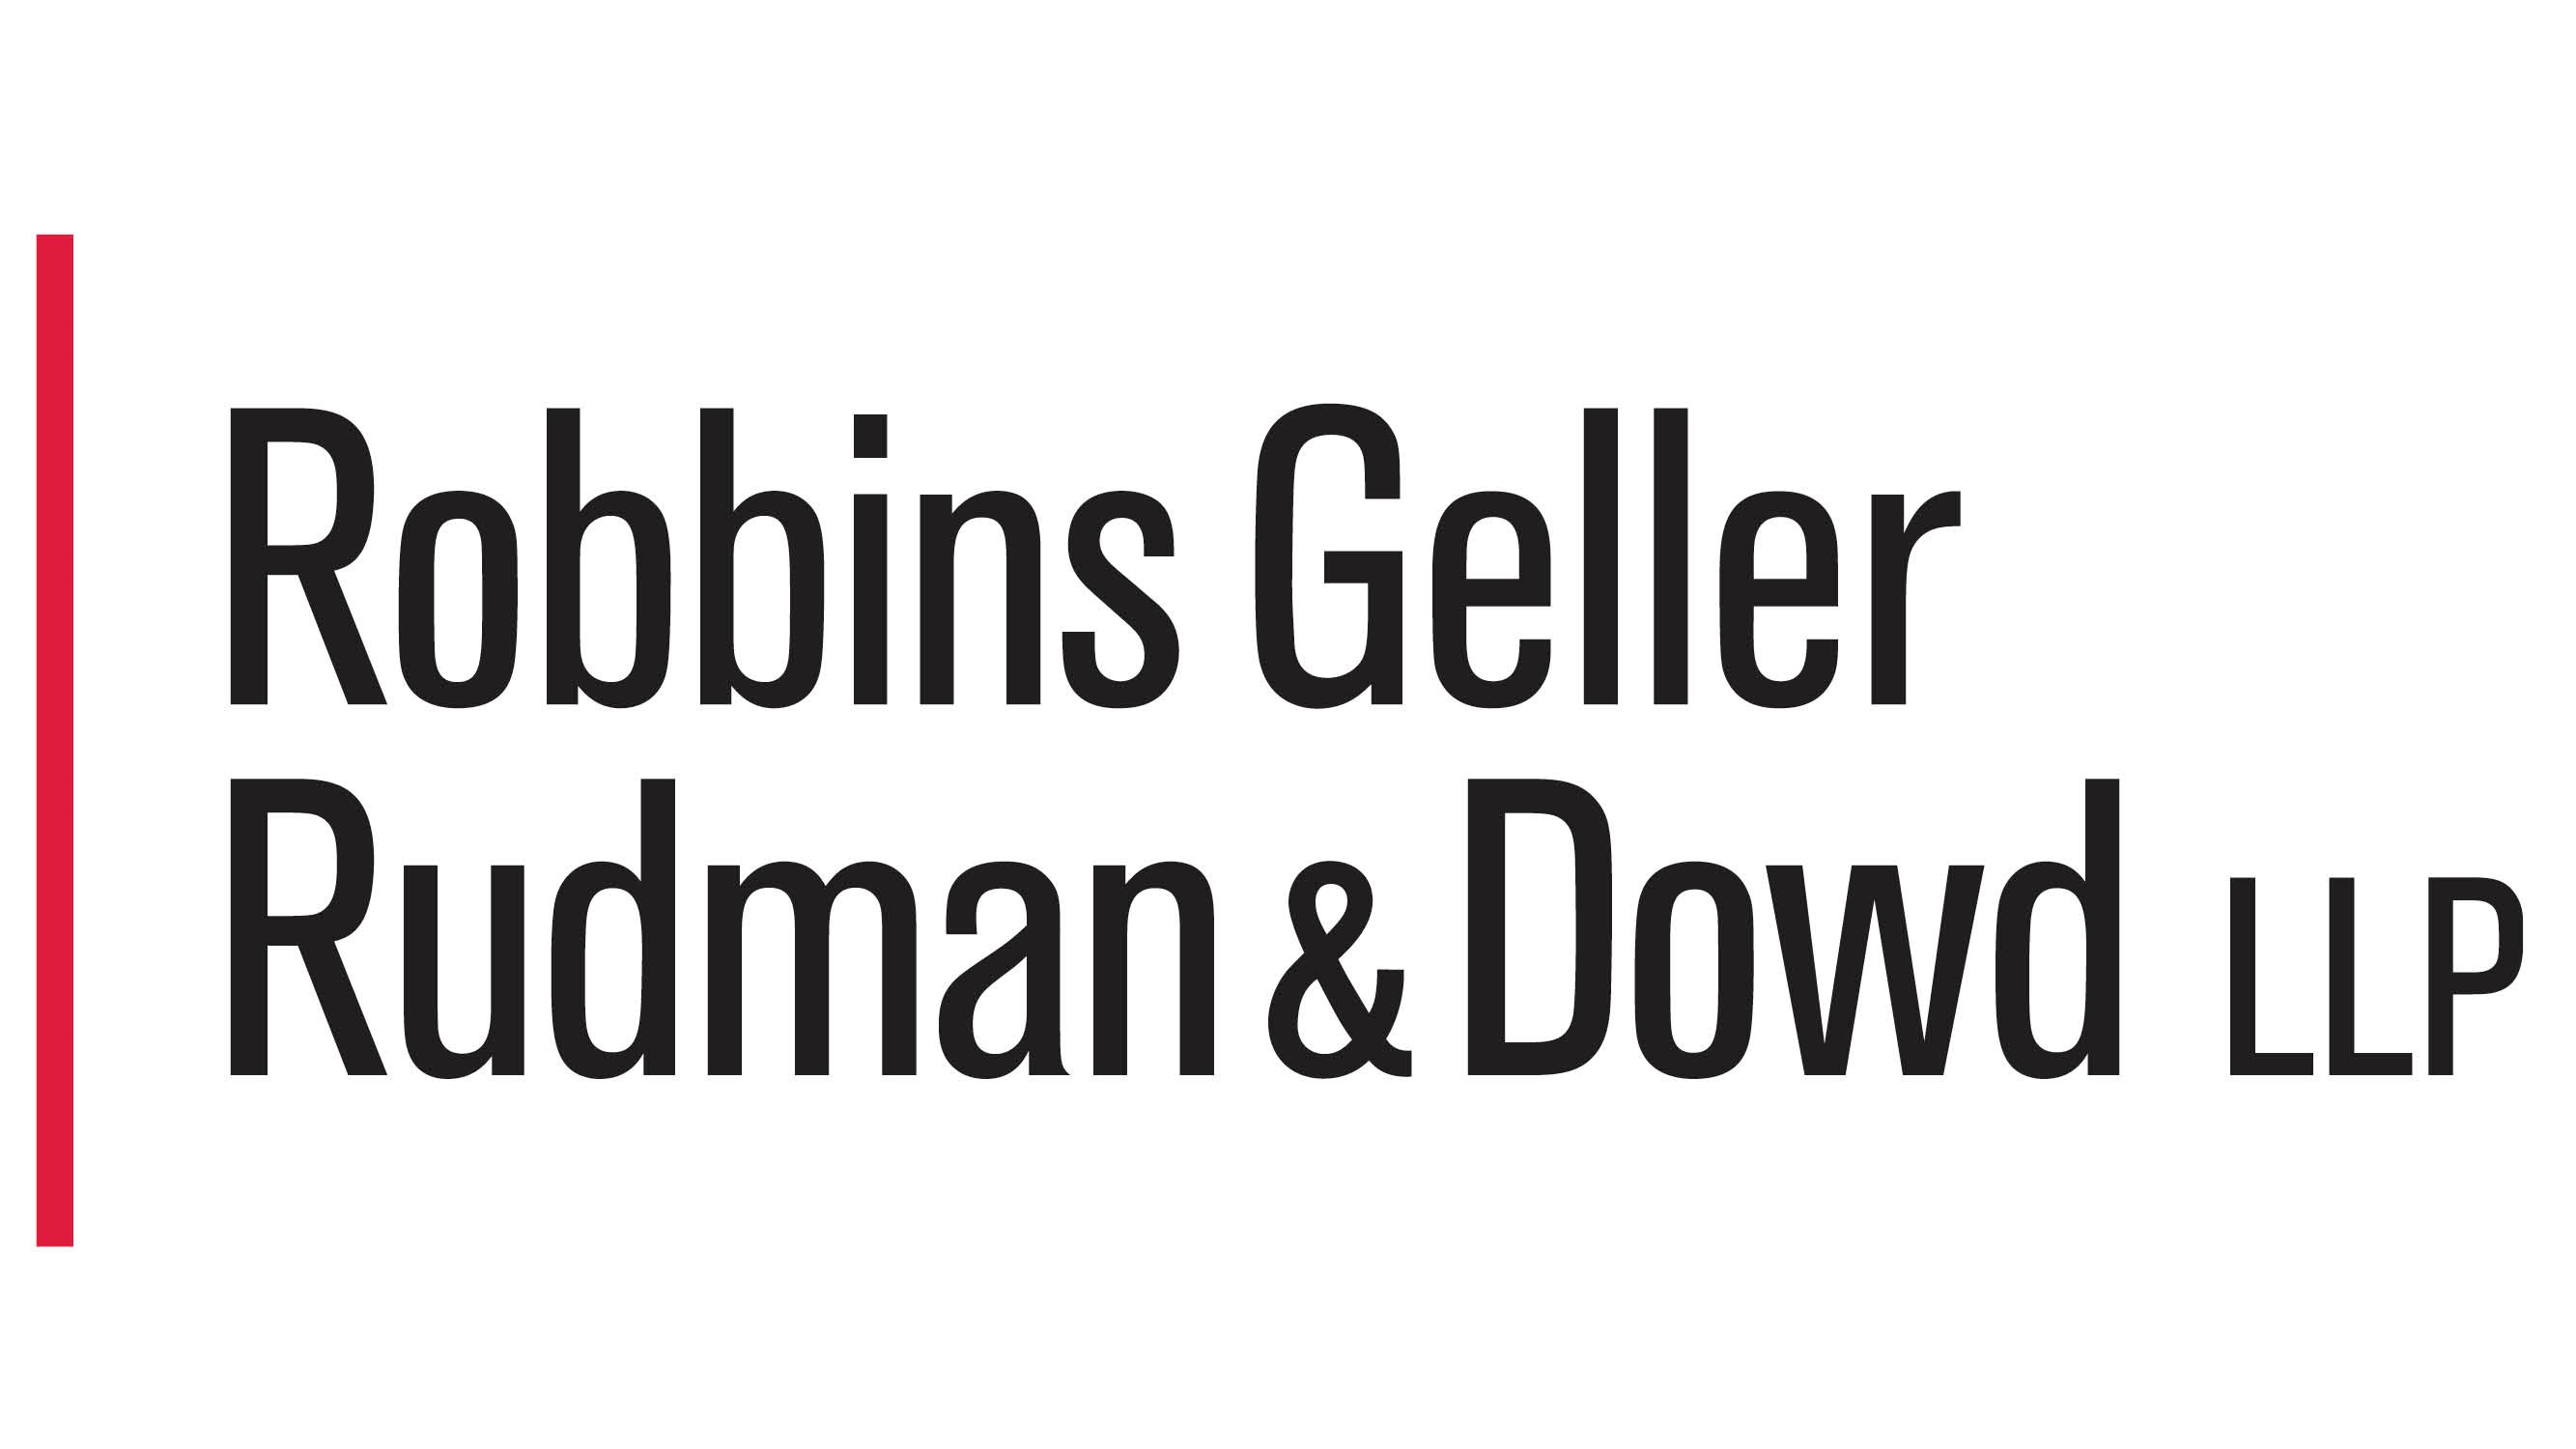 Robbins Geller Rudman & Dowd LLP, Wednesday, September 15, 2021, Press release picture